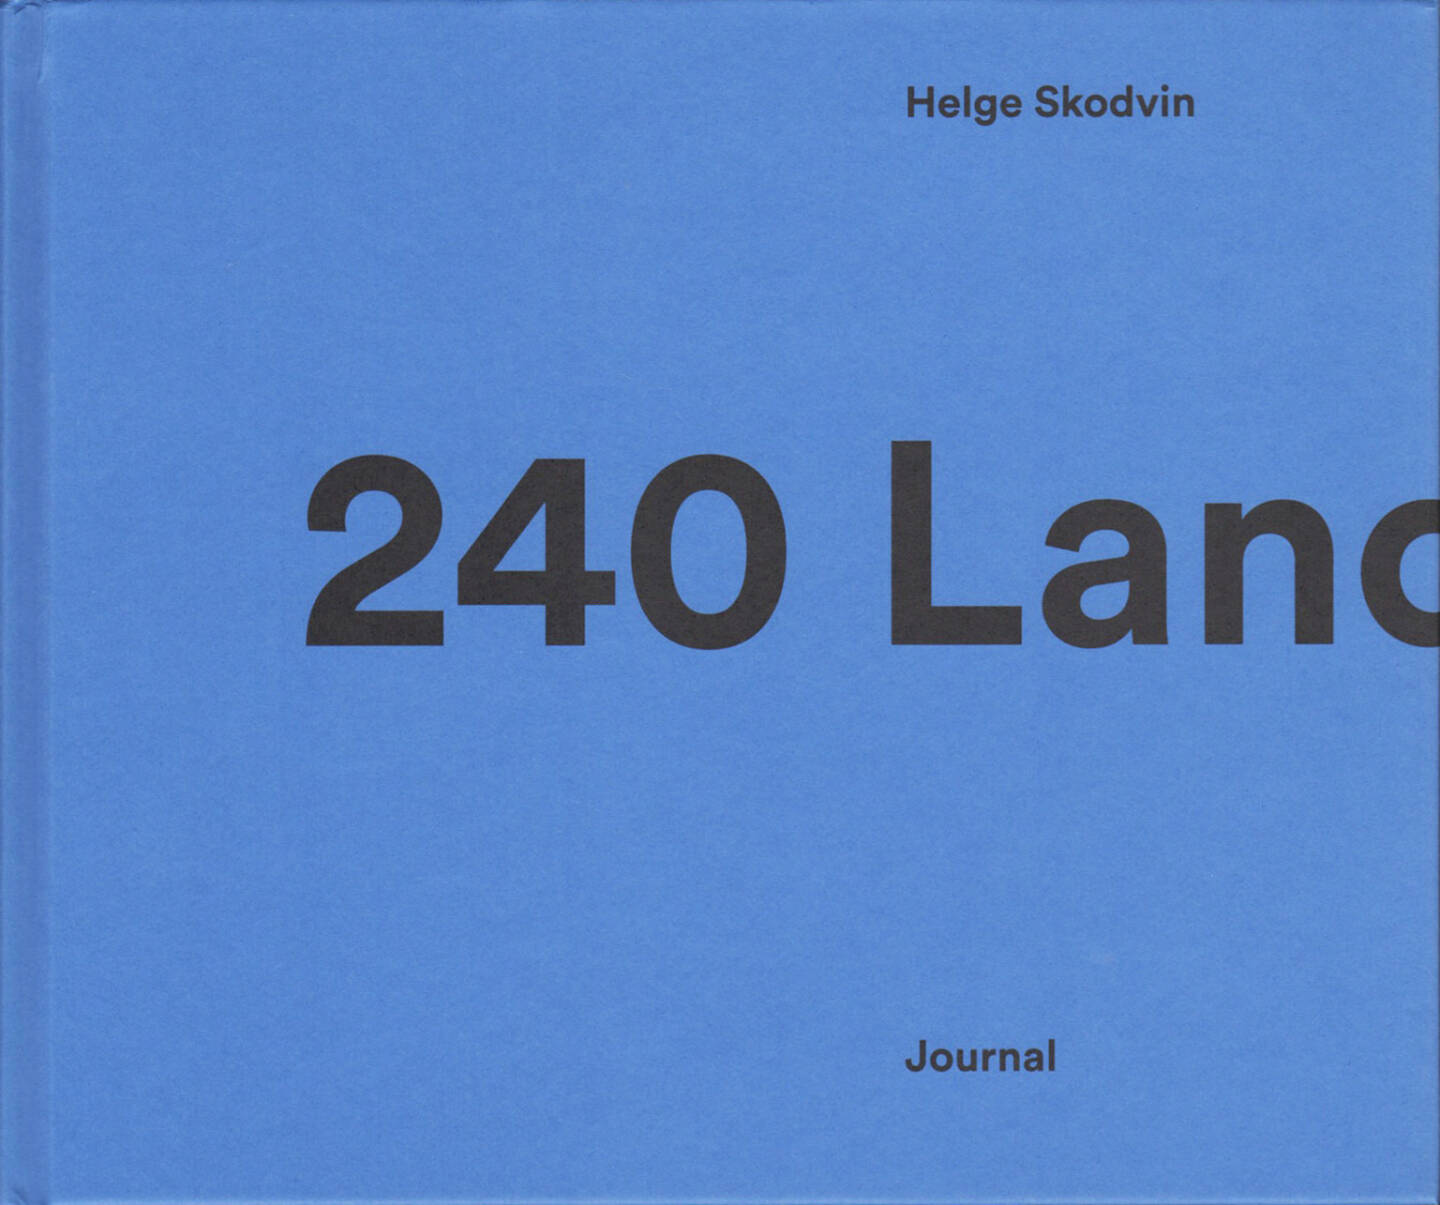 Helge Skodvin - 240 Landscapes, Journal 2015, Cover - http://josefchladek.com/book/helge_skodvin_-_240_landscapes